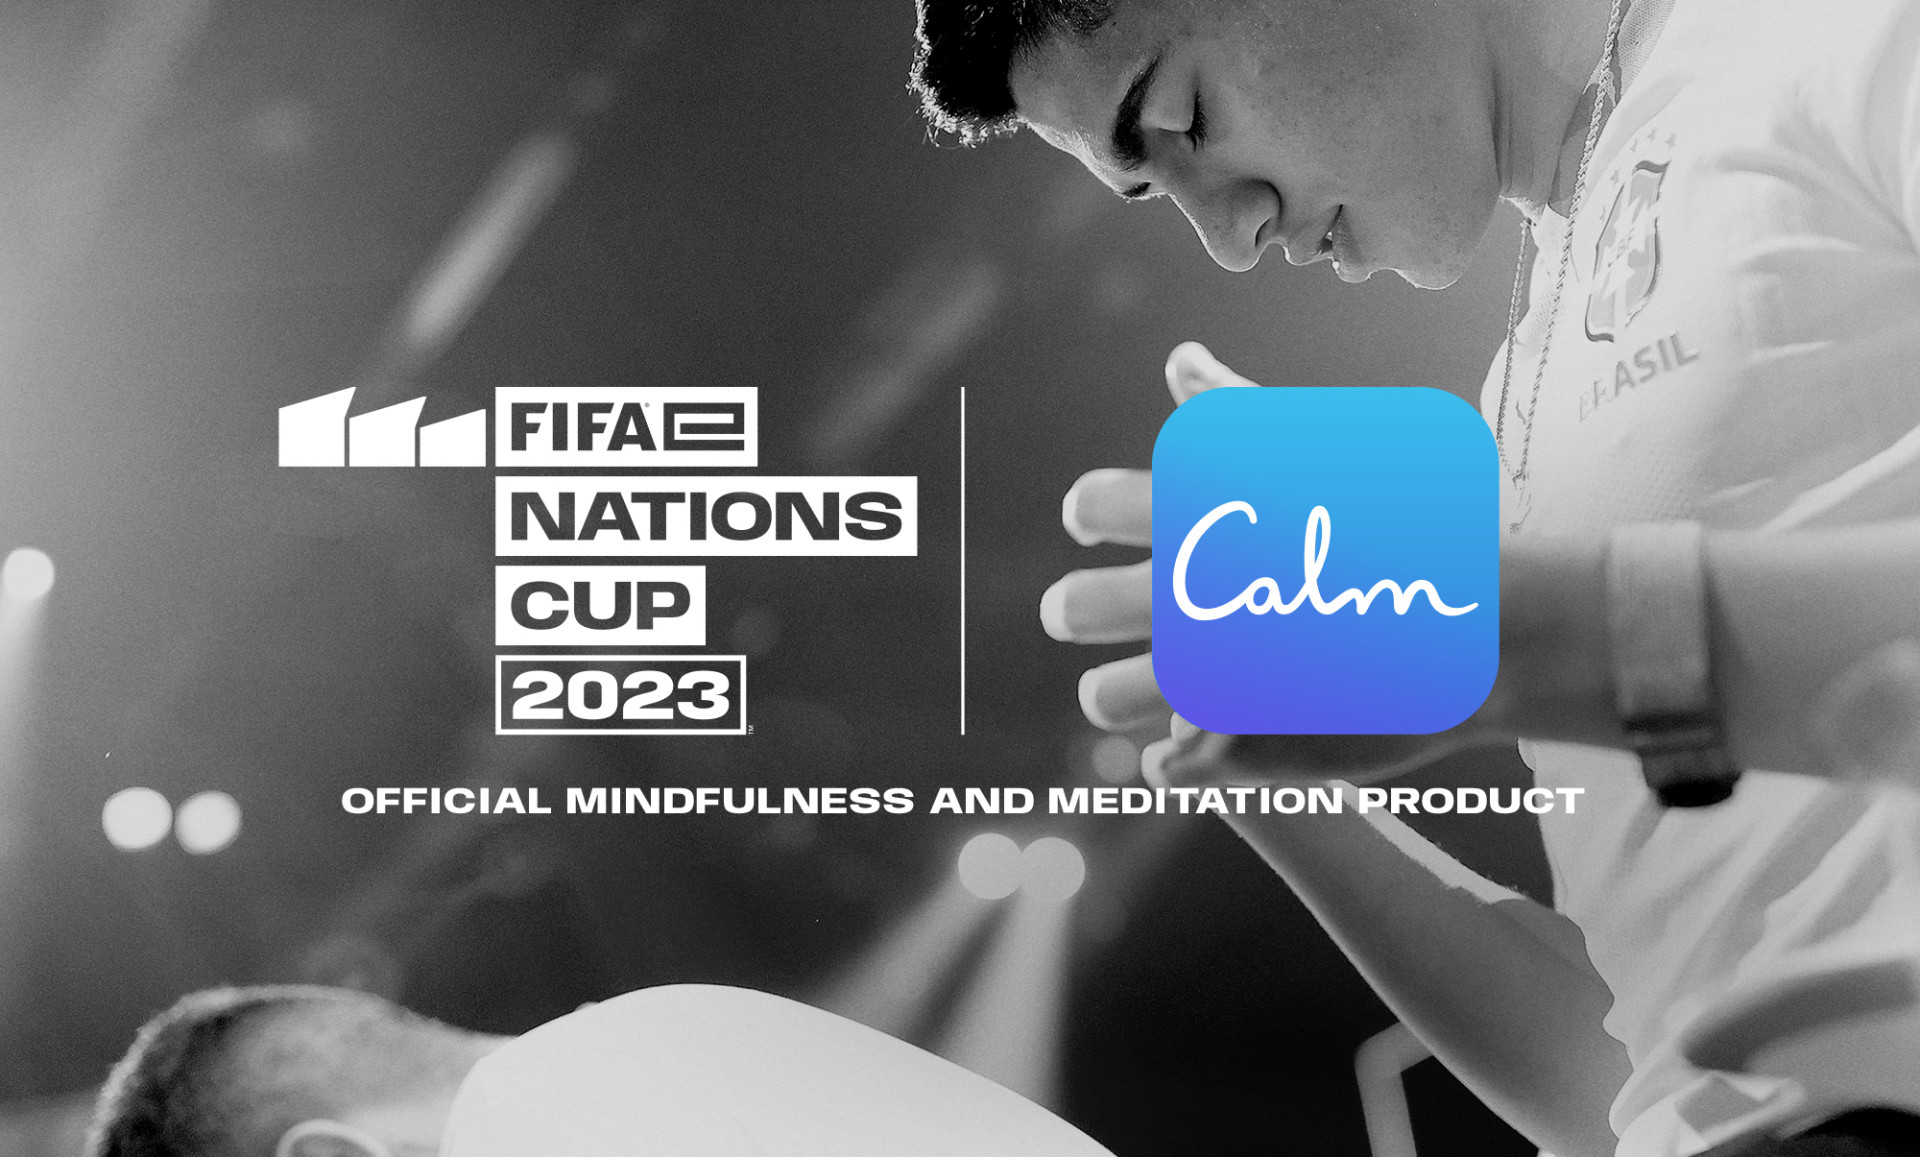 FIFAe announces mental health partnership with Calm